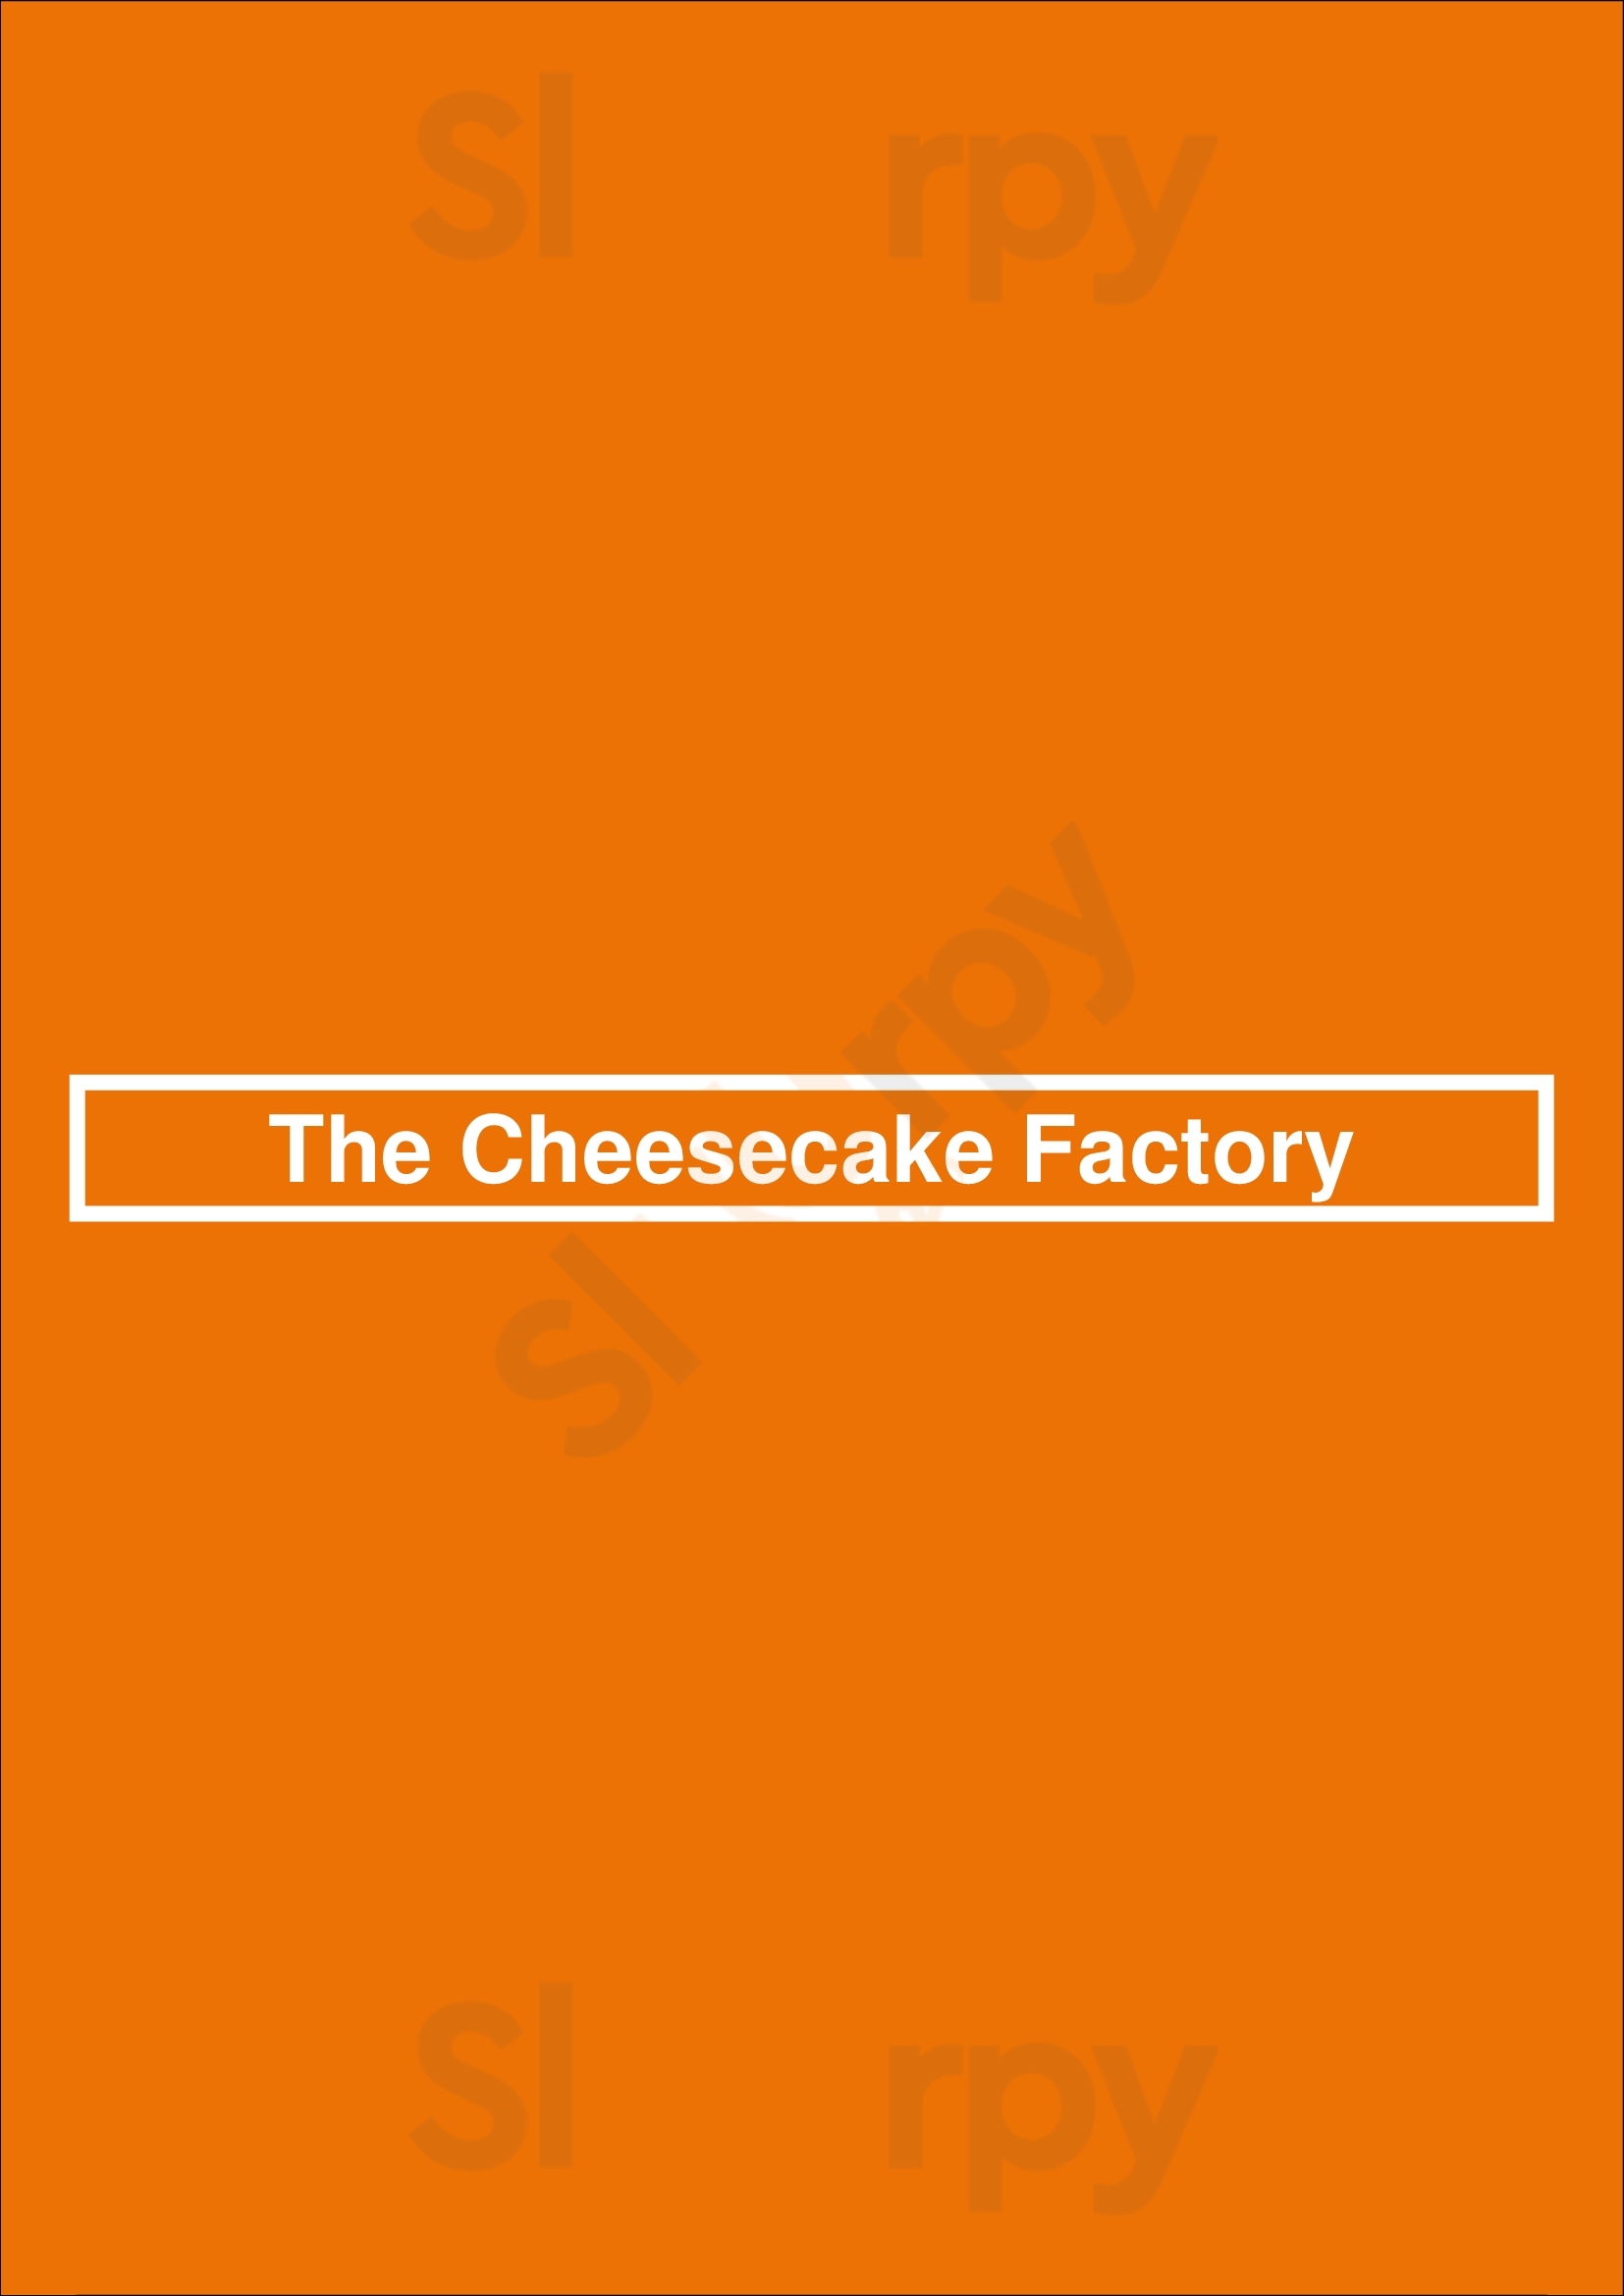 The Cheesecake Factory Houston Menu - 1